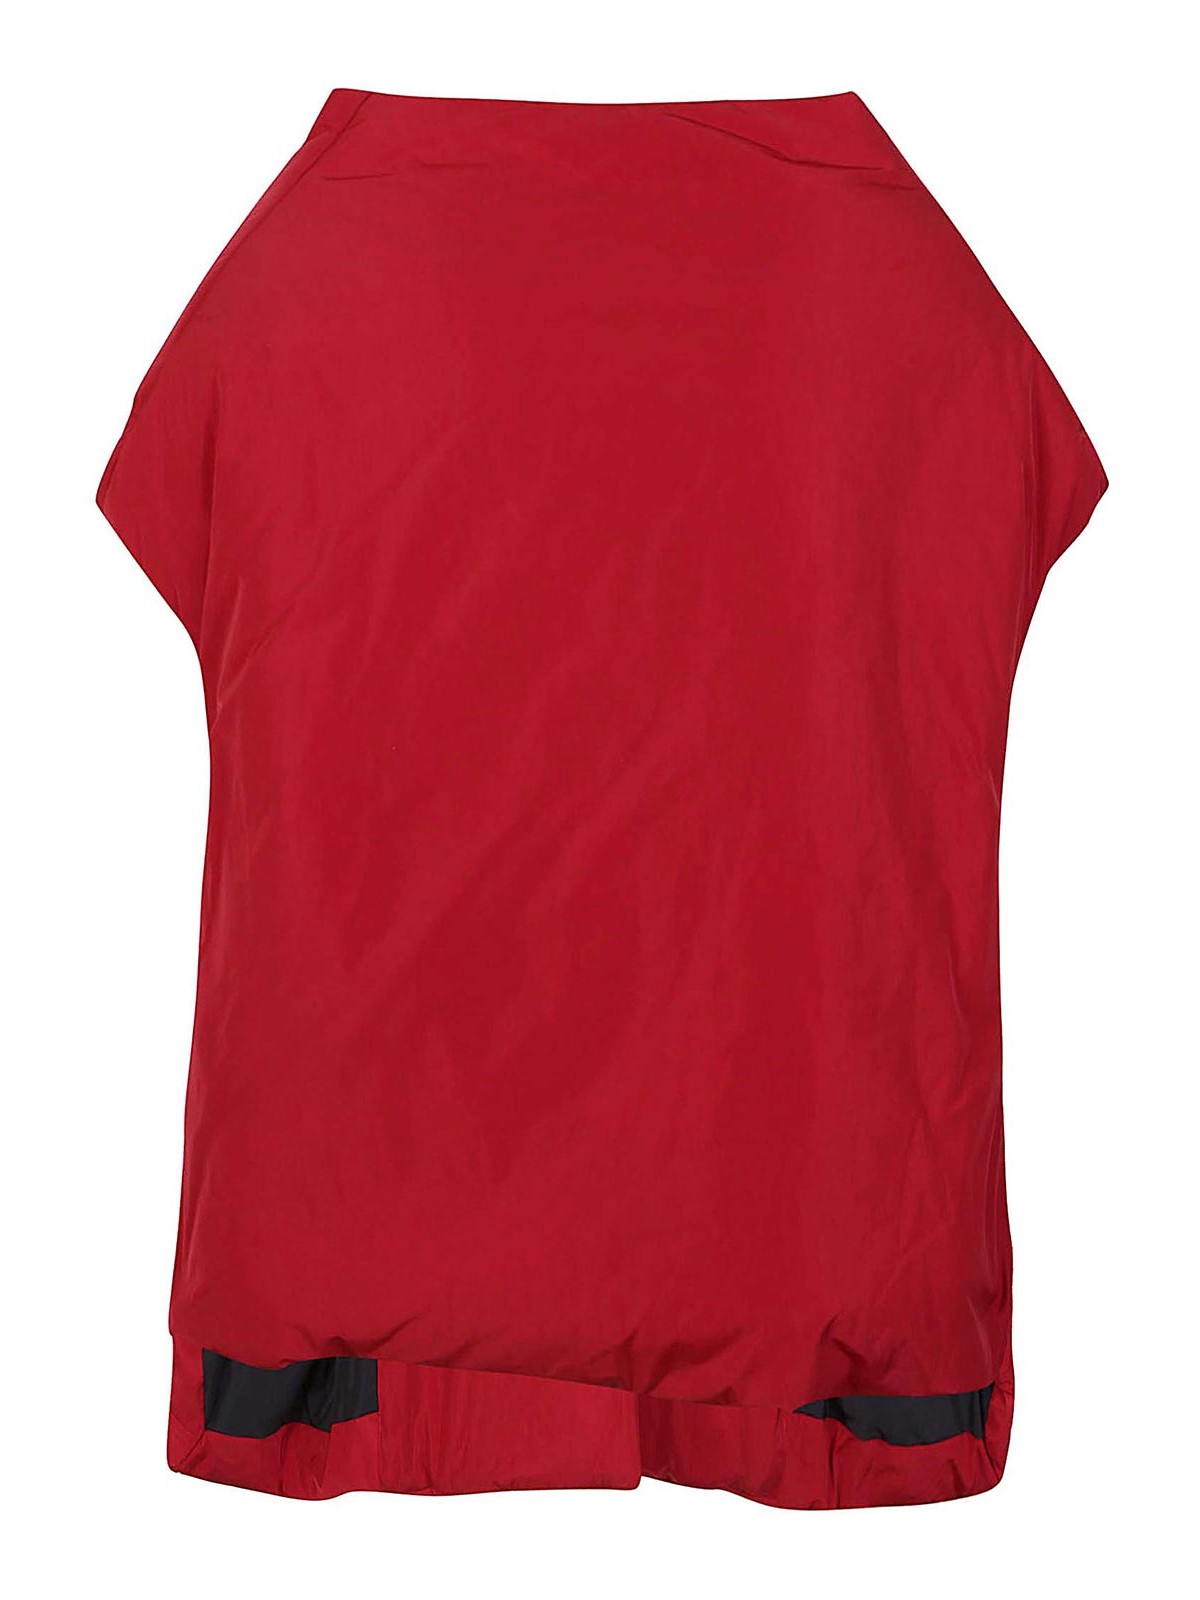 Shop Revertissu Ariella Padded Vest In Red